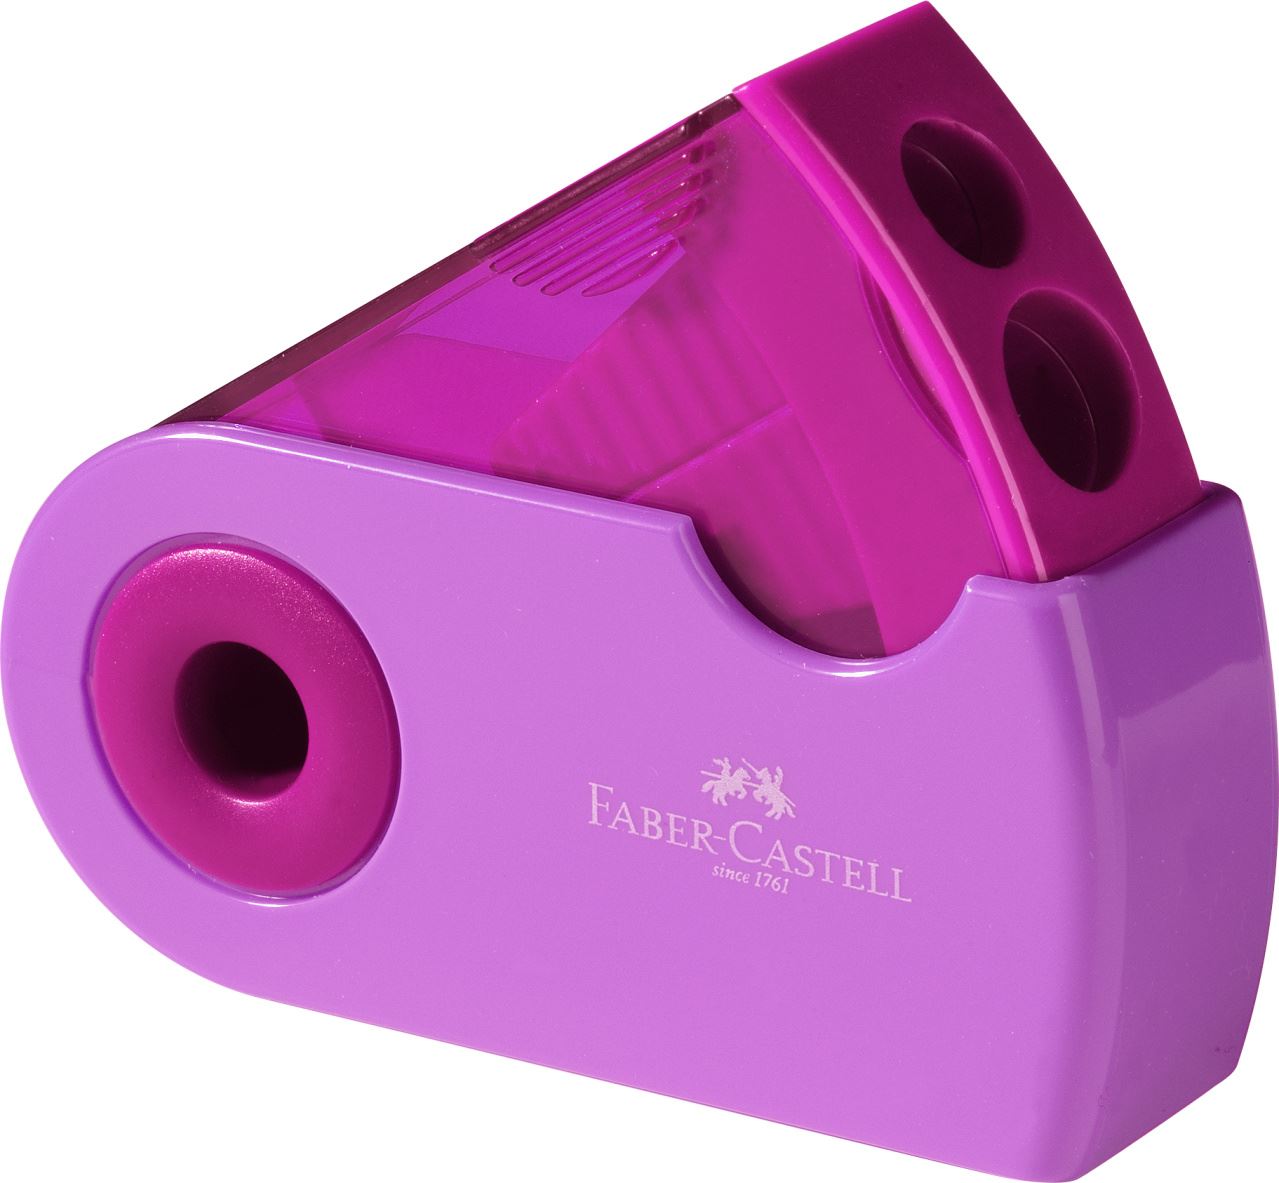 Faber-Castell - Pencil set Grip 2001 - Sleeve purple